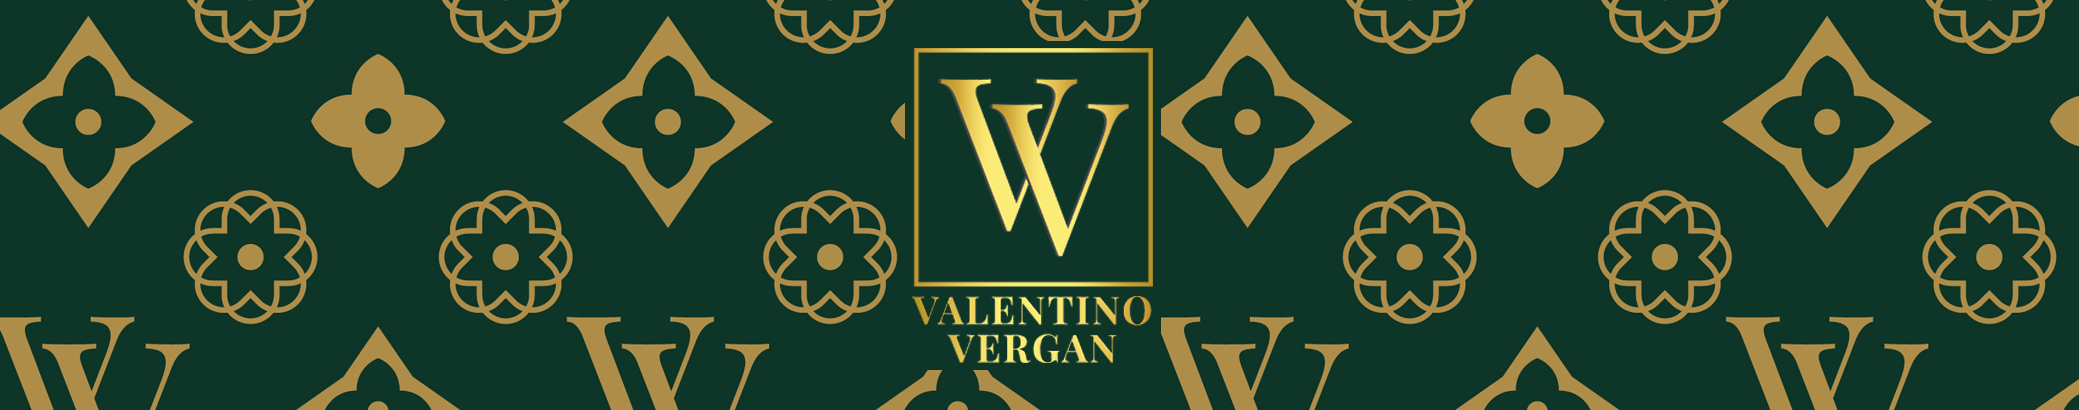 Valentino Vergan's profile banner